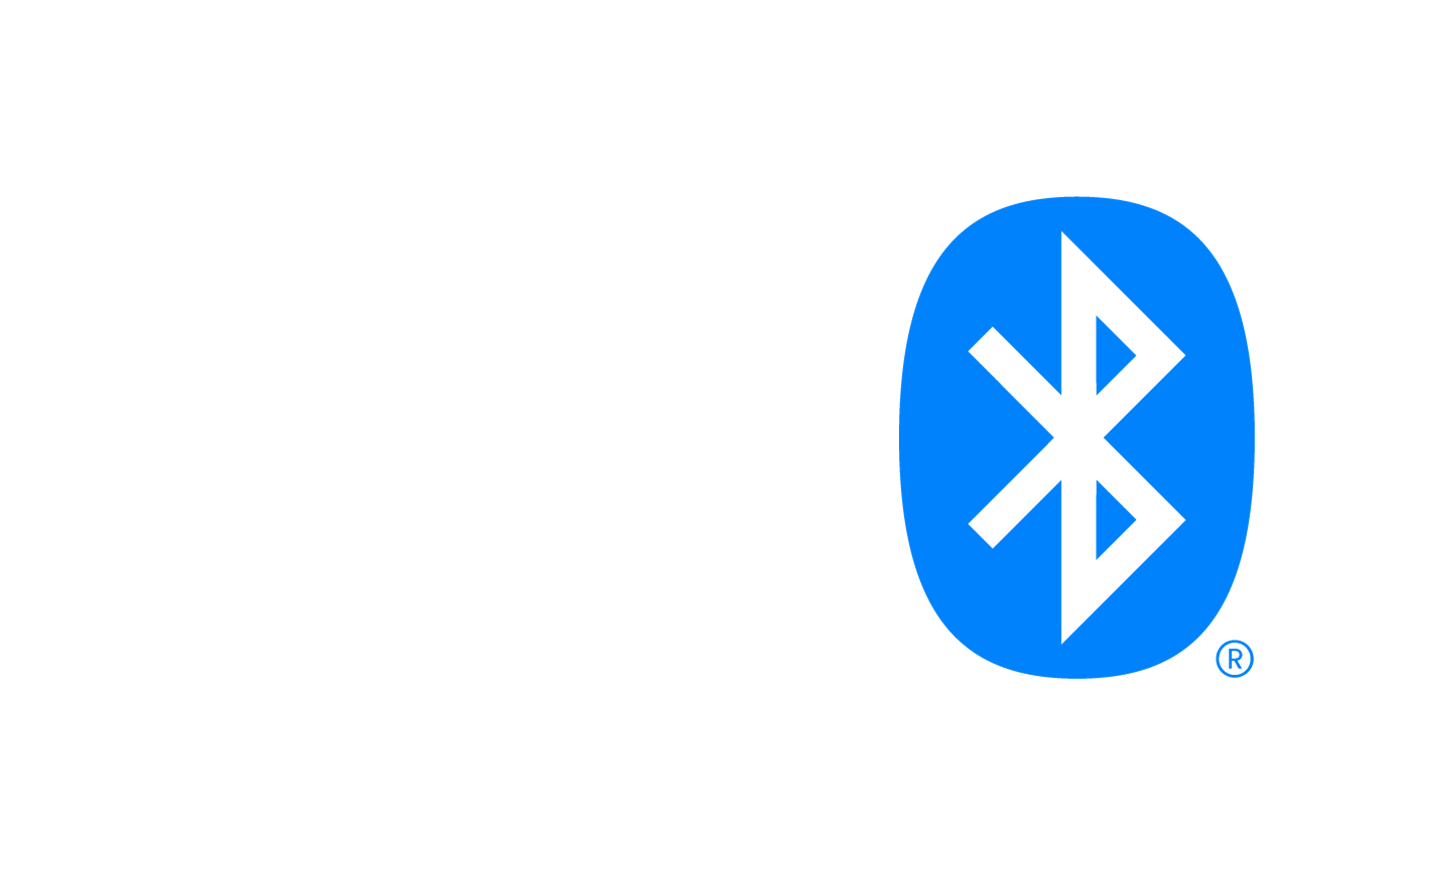 Slika logotipa Bluetooth